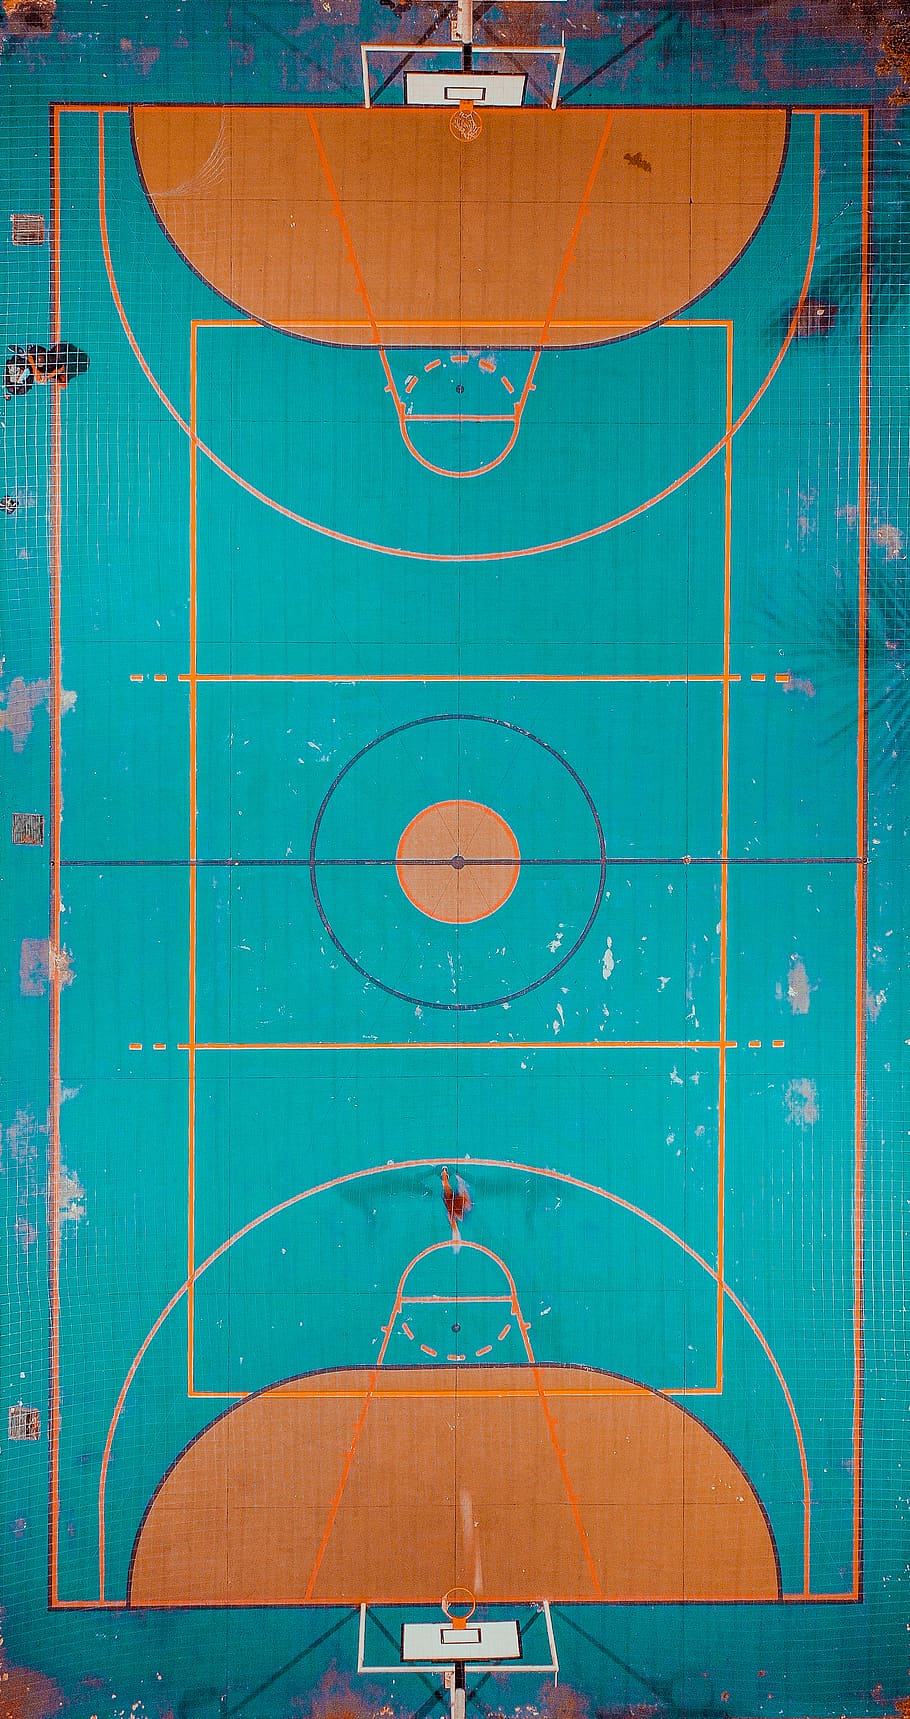 sport, basketball - sport, no people, geometric shape, circle